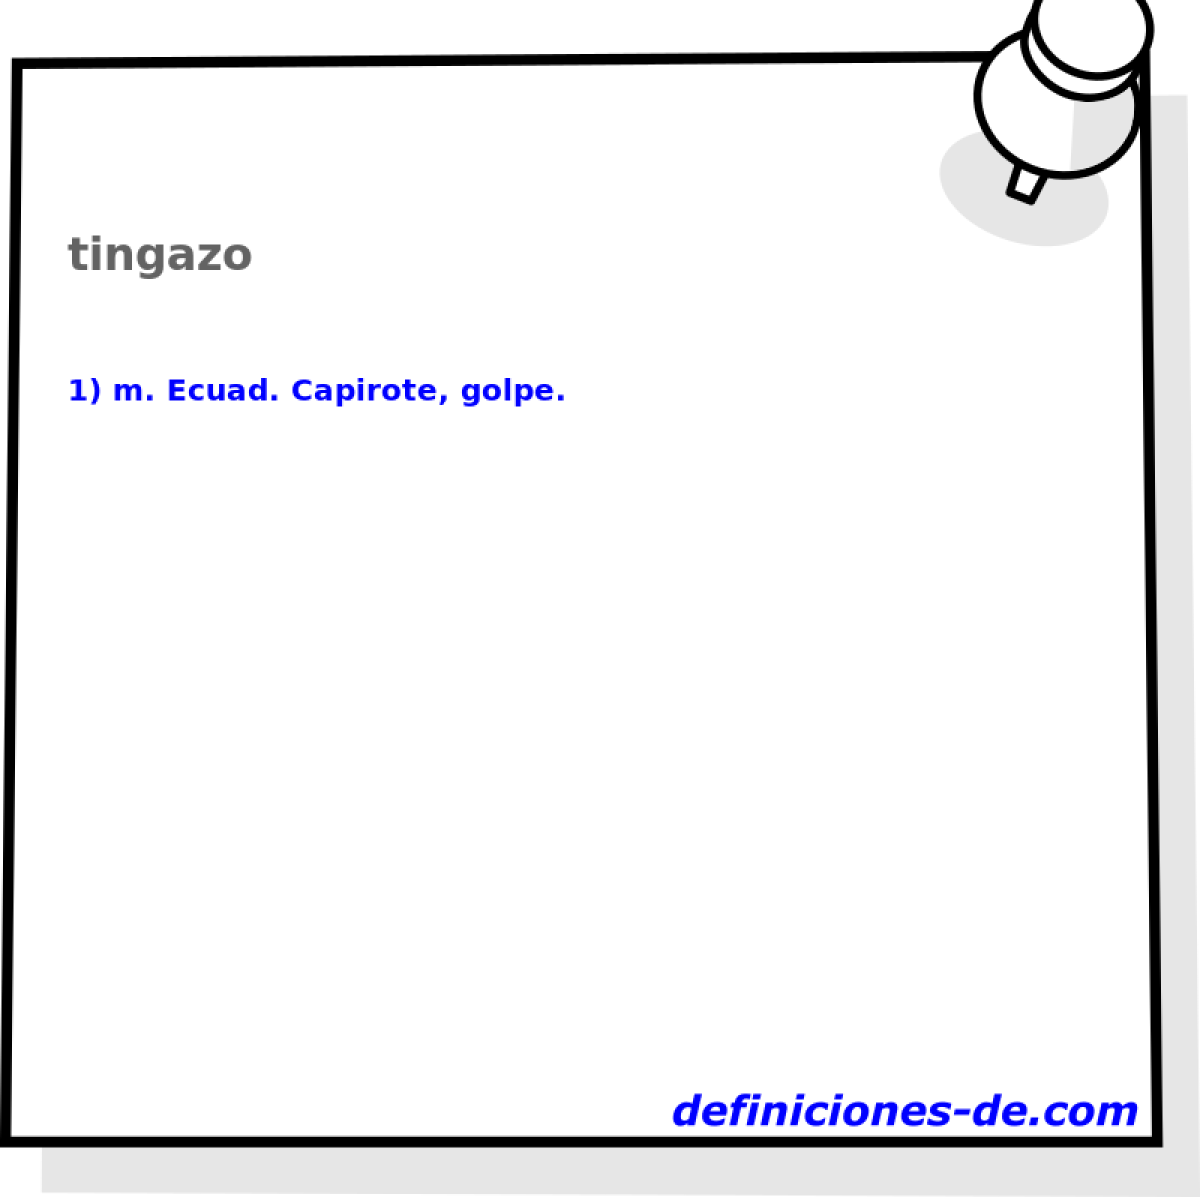 tingazo 